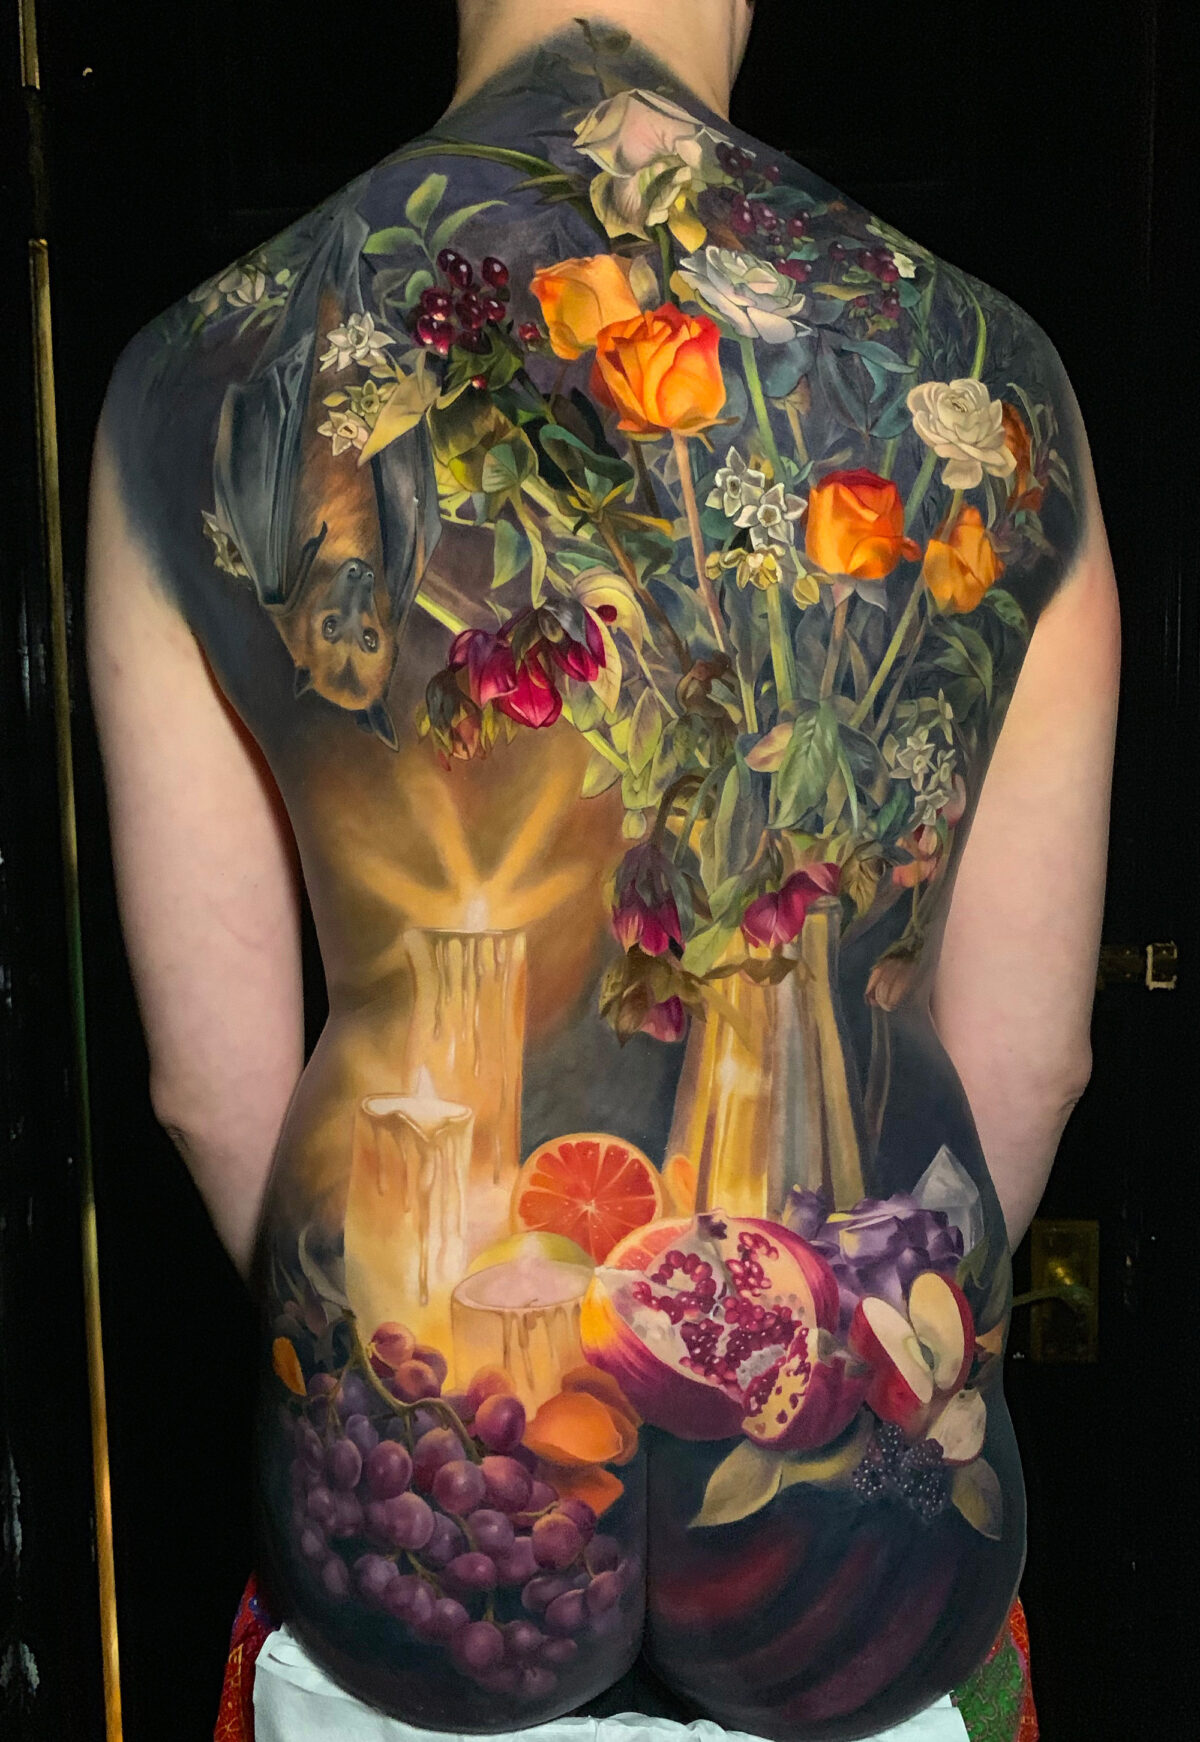 Extraordinary Tattoos Of Still Life Figures By Makkala Rose (2)